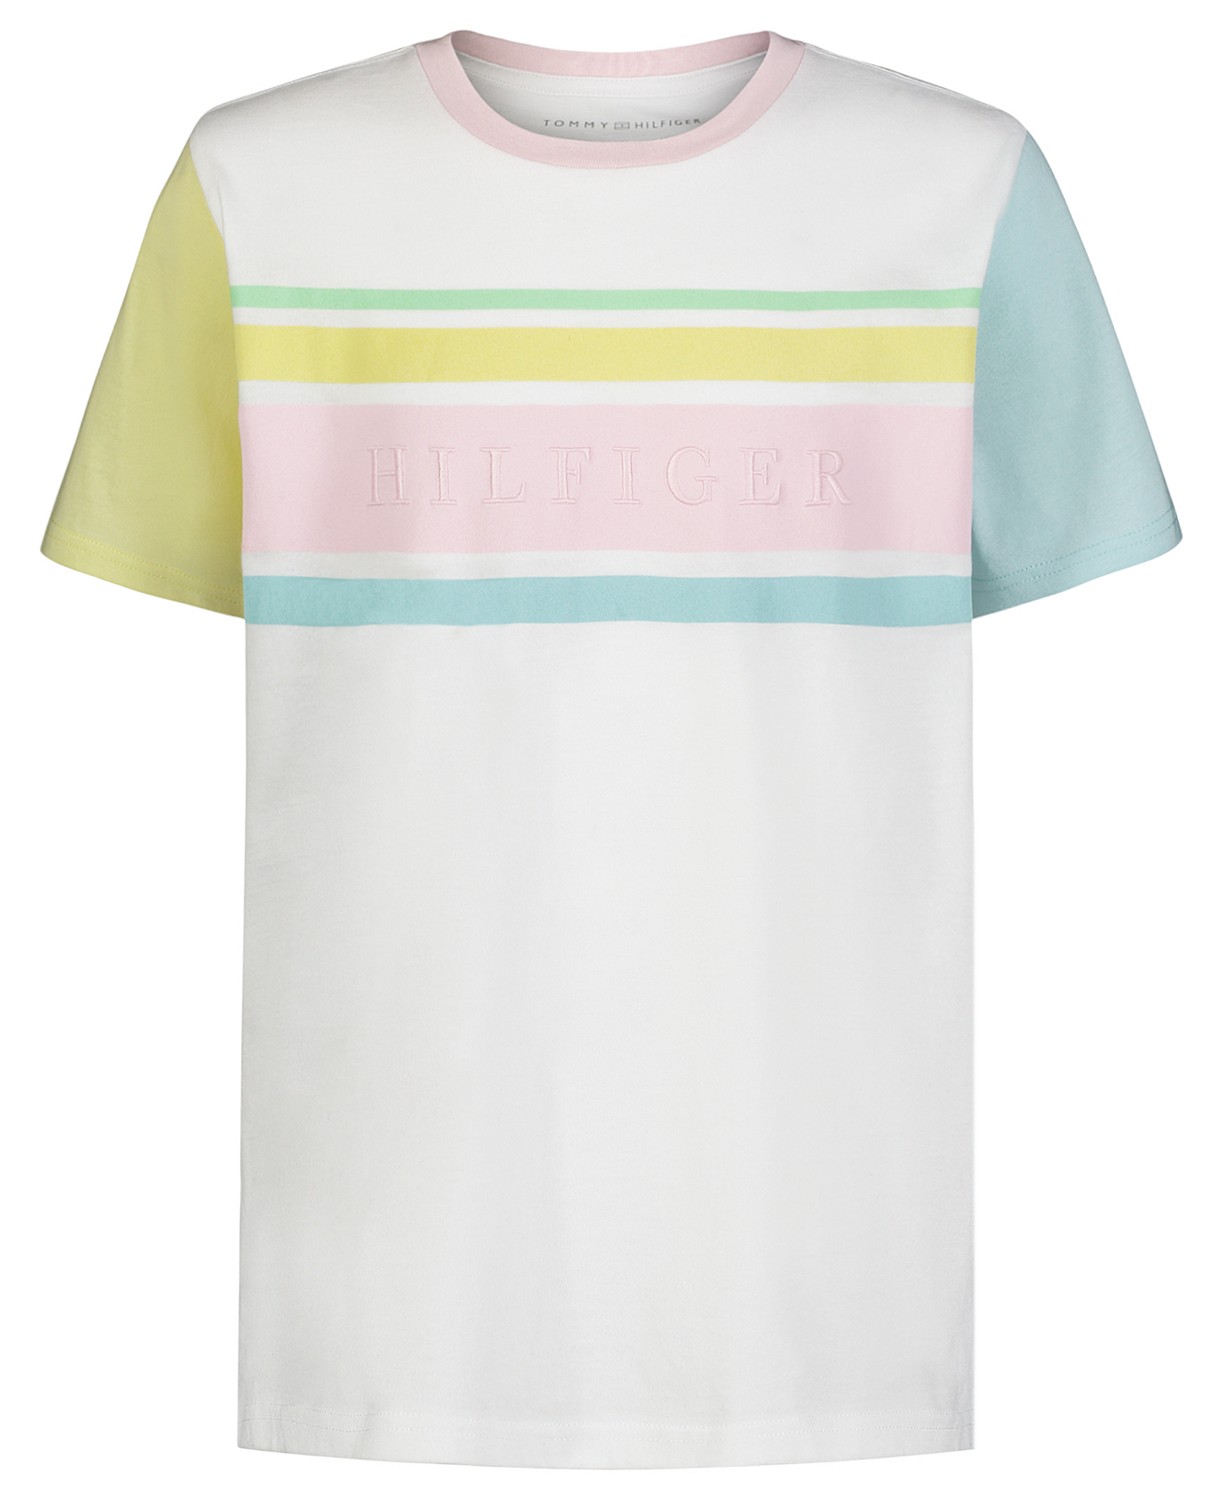 Toddler Boys Pastel Lines Short Sleeve T-shirt